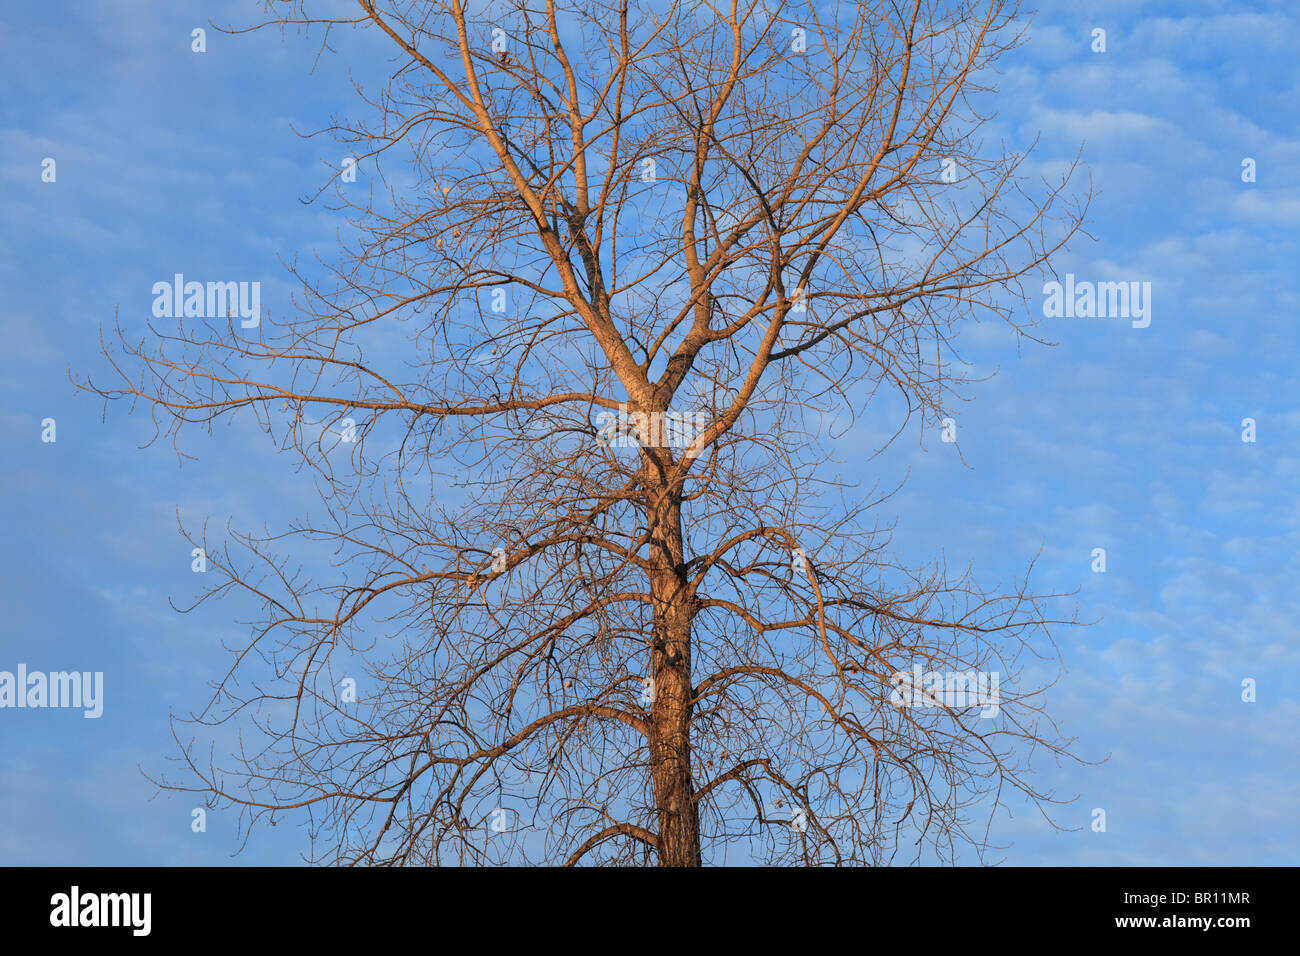 A barren, leafless tree against blue winter sky. Stock Photo